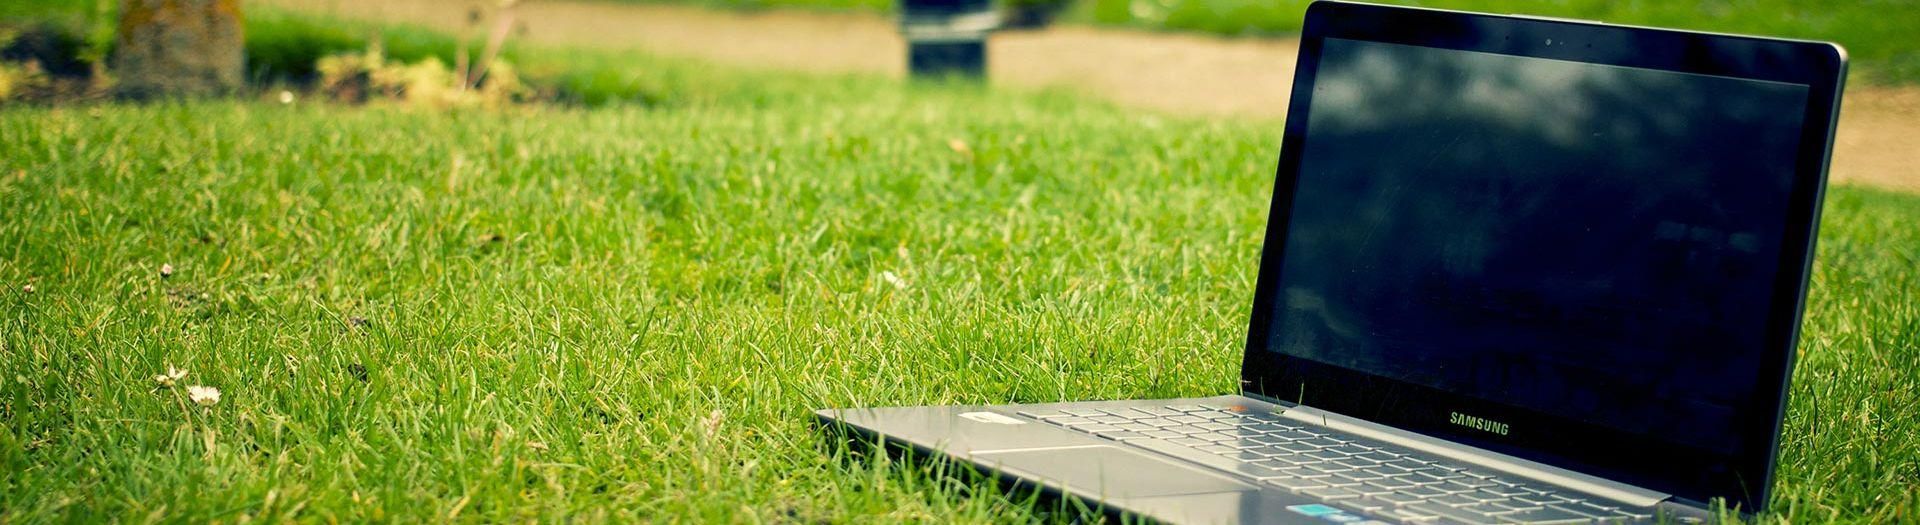 laptop-notebook-grass-meadow-9b558d75 Custom Handheld | BRIGHT Software B.V.